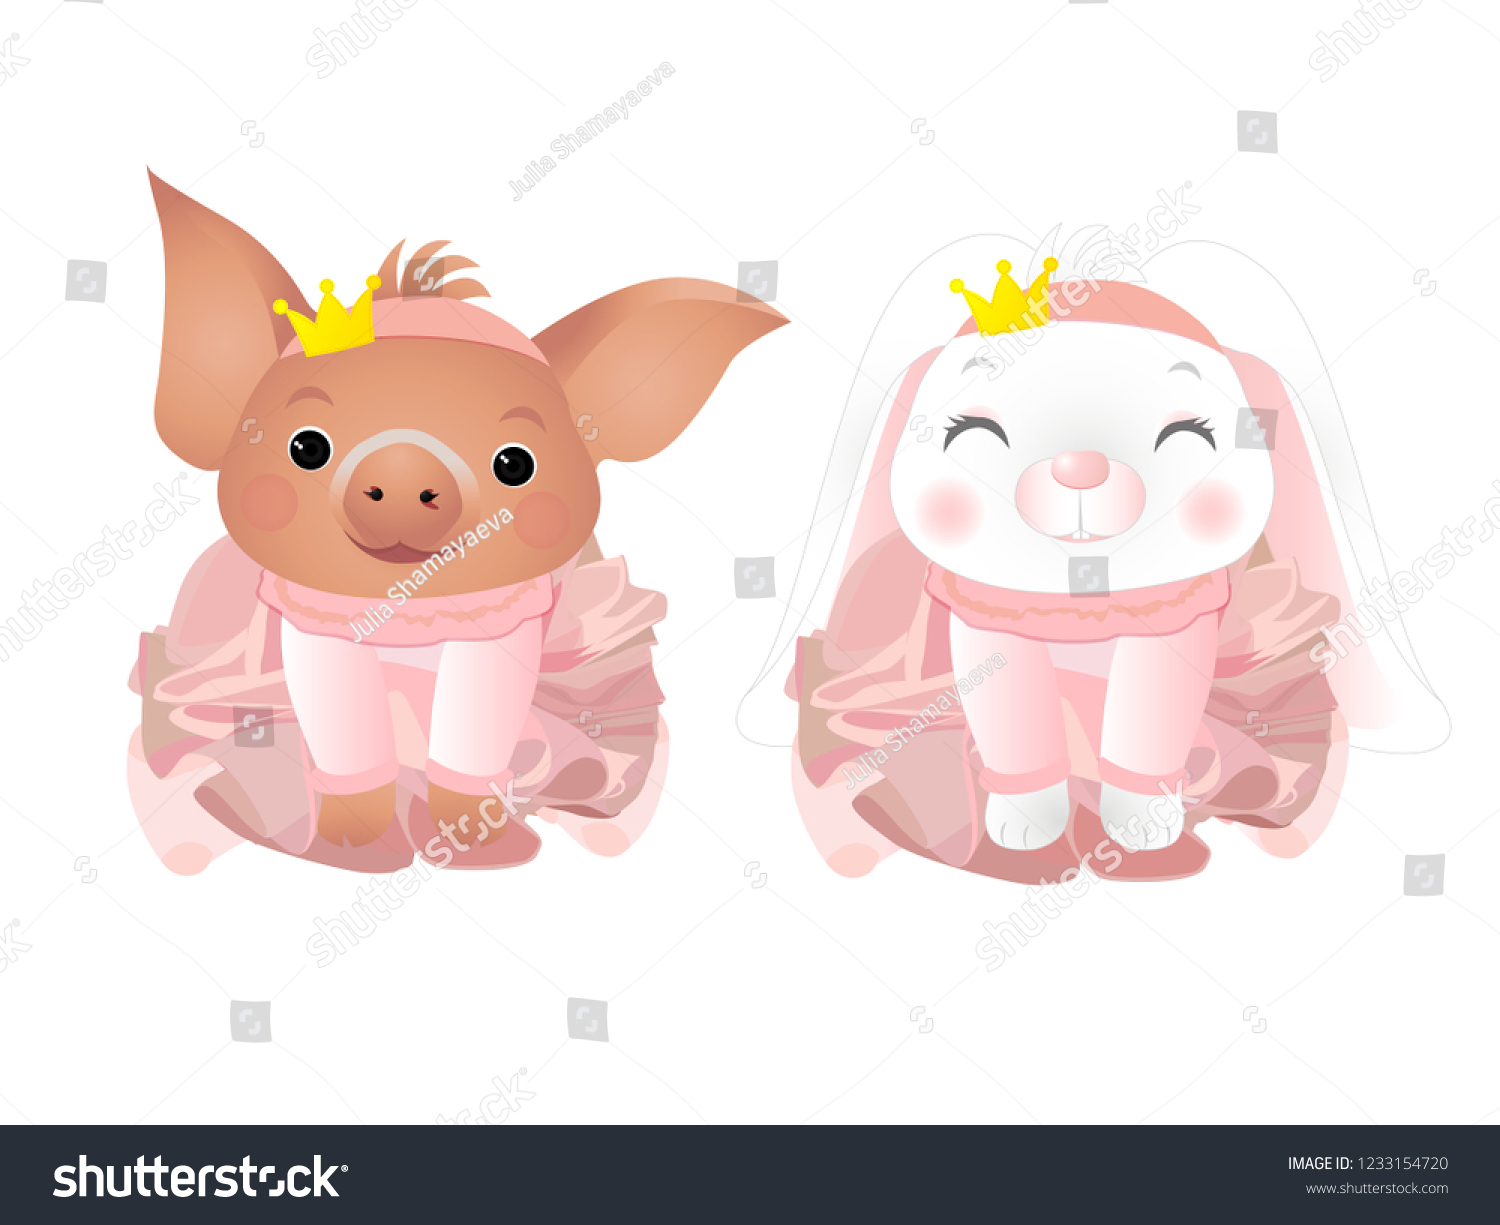 Cute Cartoon Bunny Ballerina Pig Ballerina Stock Vector Free) 1233154720